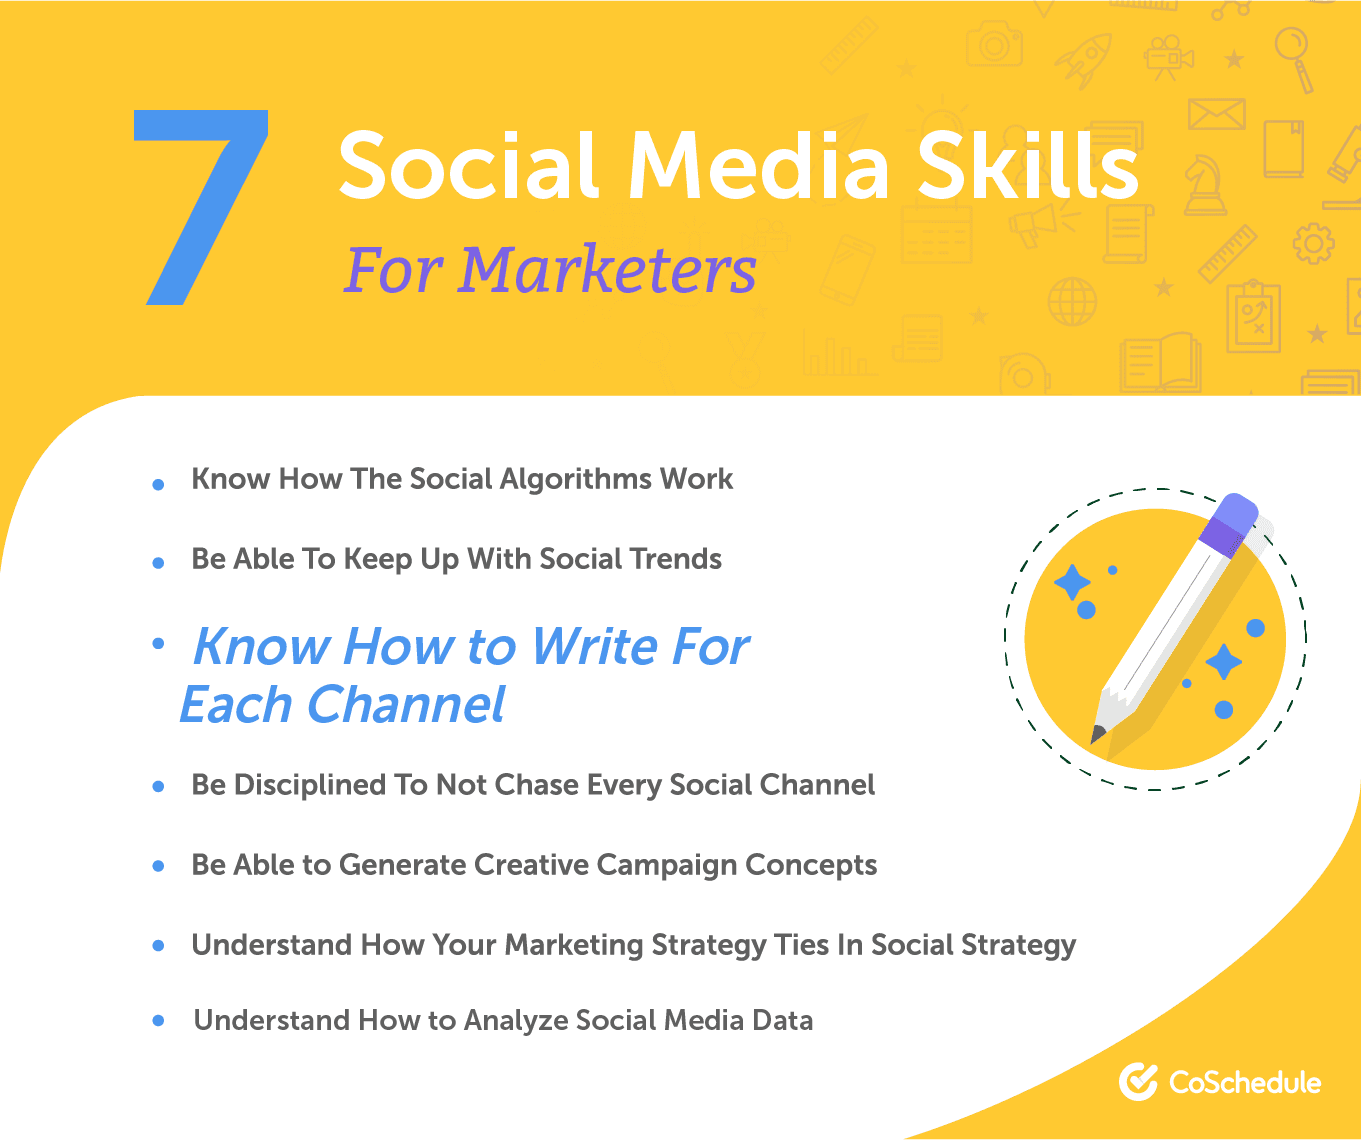 List of 7 social media skills for marketers.